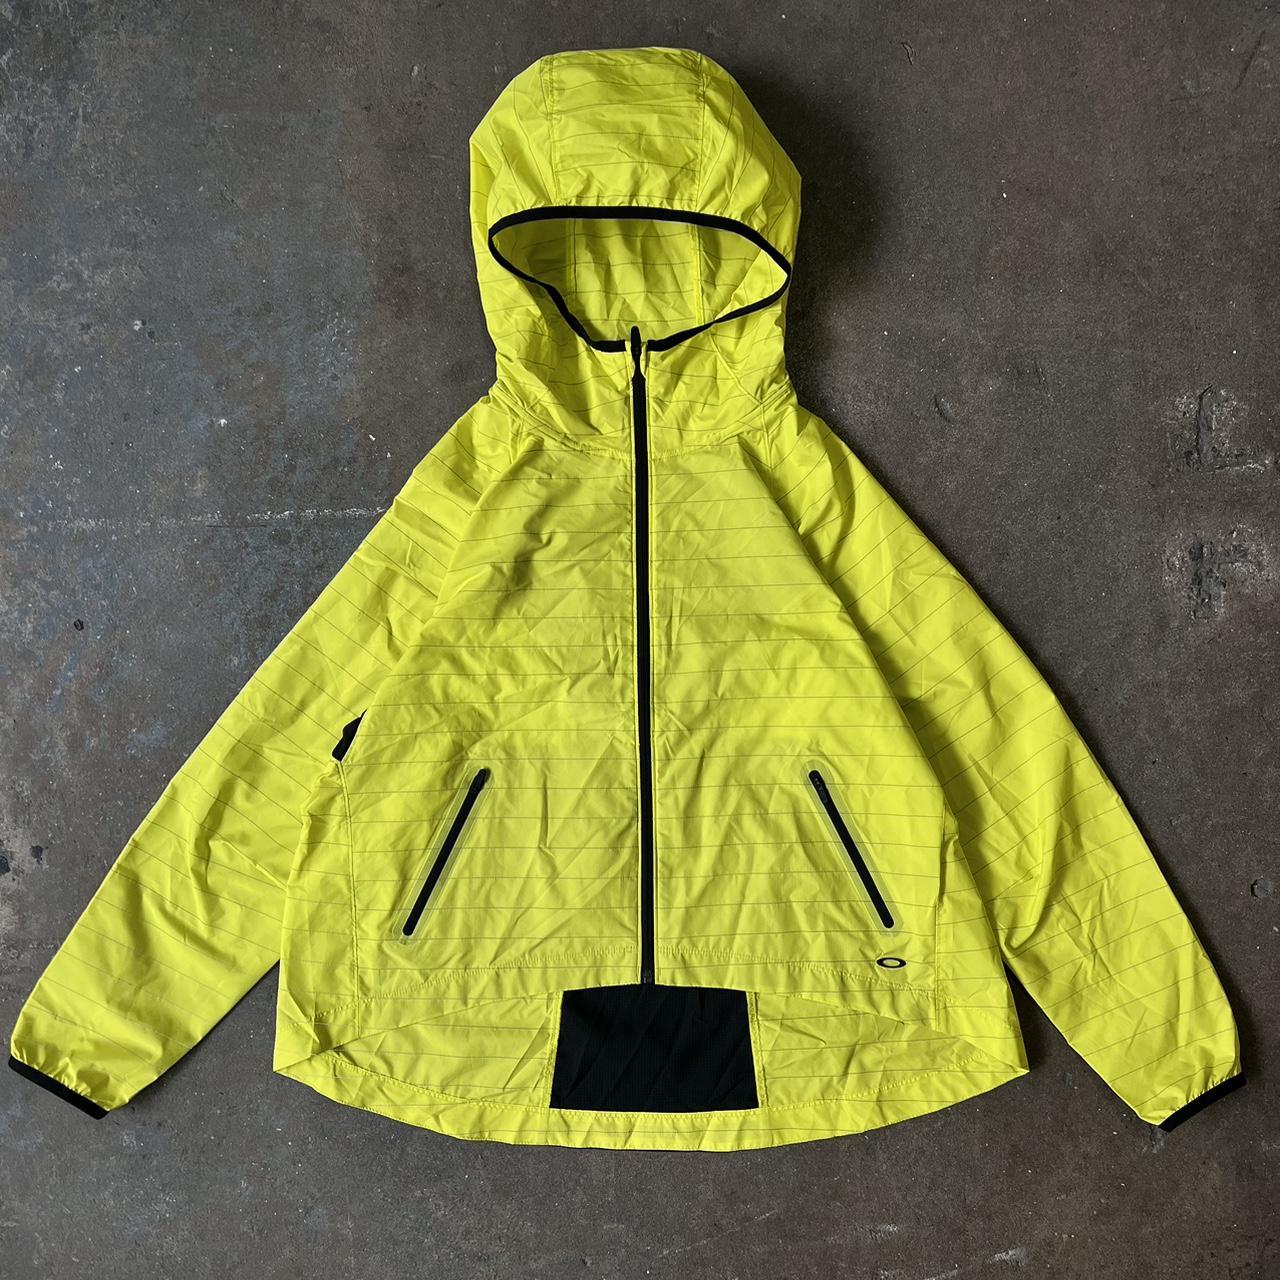 Oakley Men's Yellow and Green Jacket | Depop